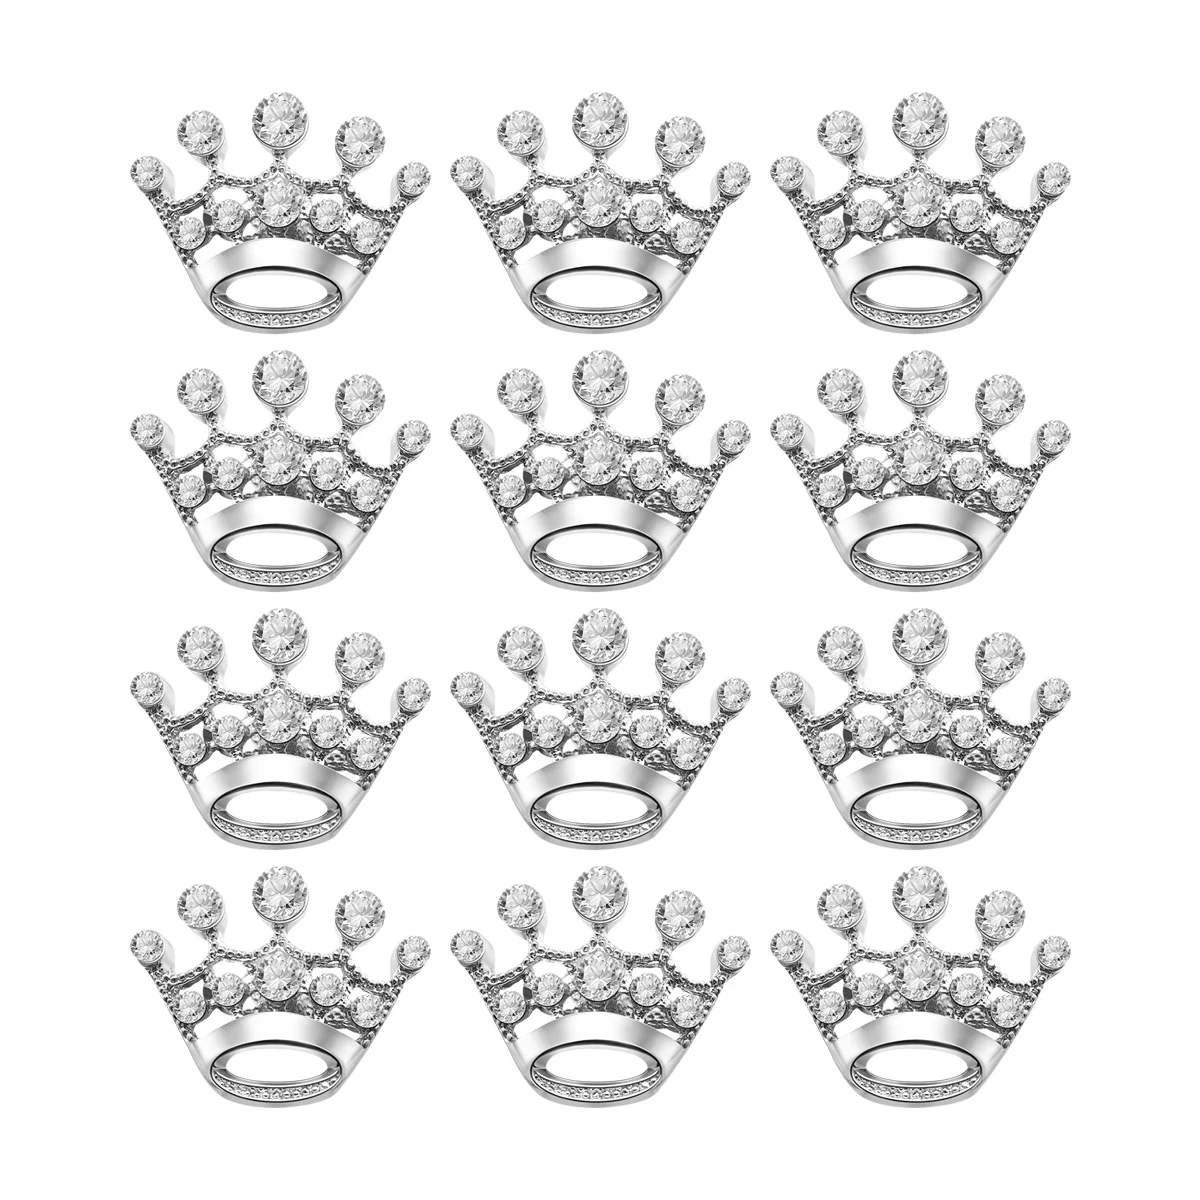 

crown brooch for crafts brooch corsage diamante party tiara crown brooch pin bulk 12pcs pin ( silver )